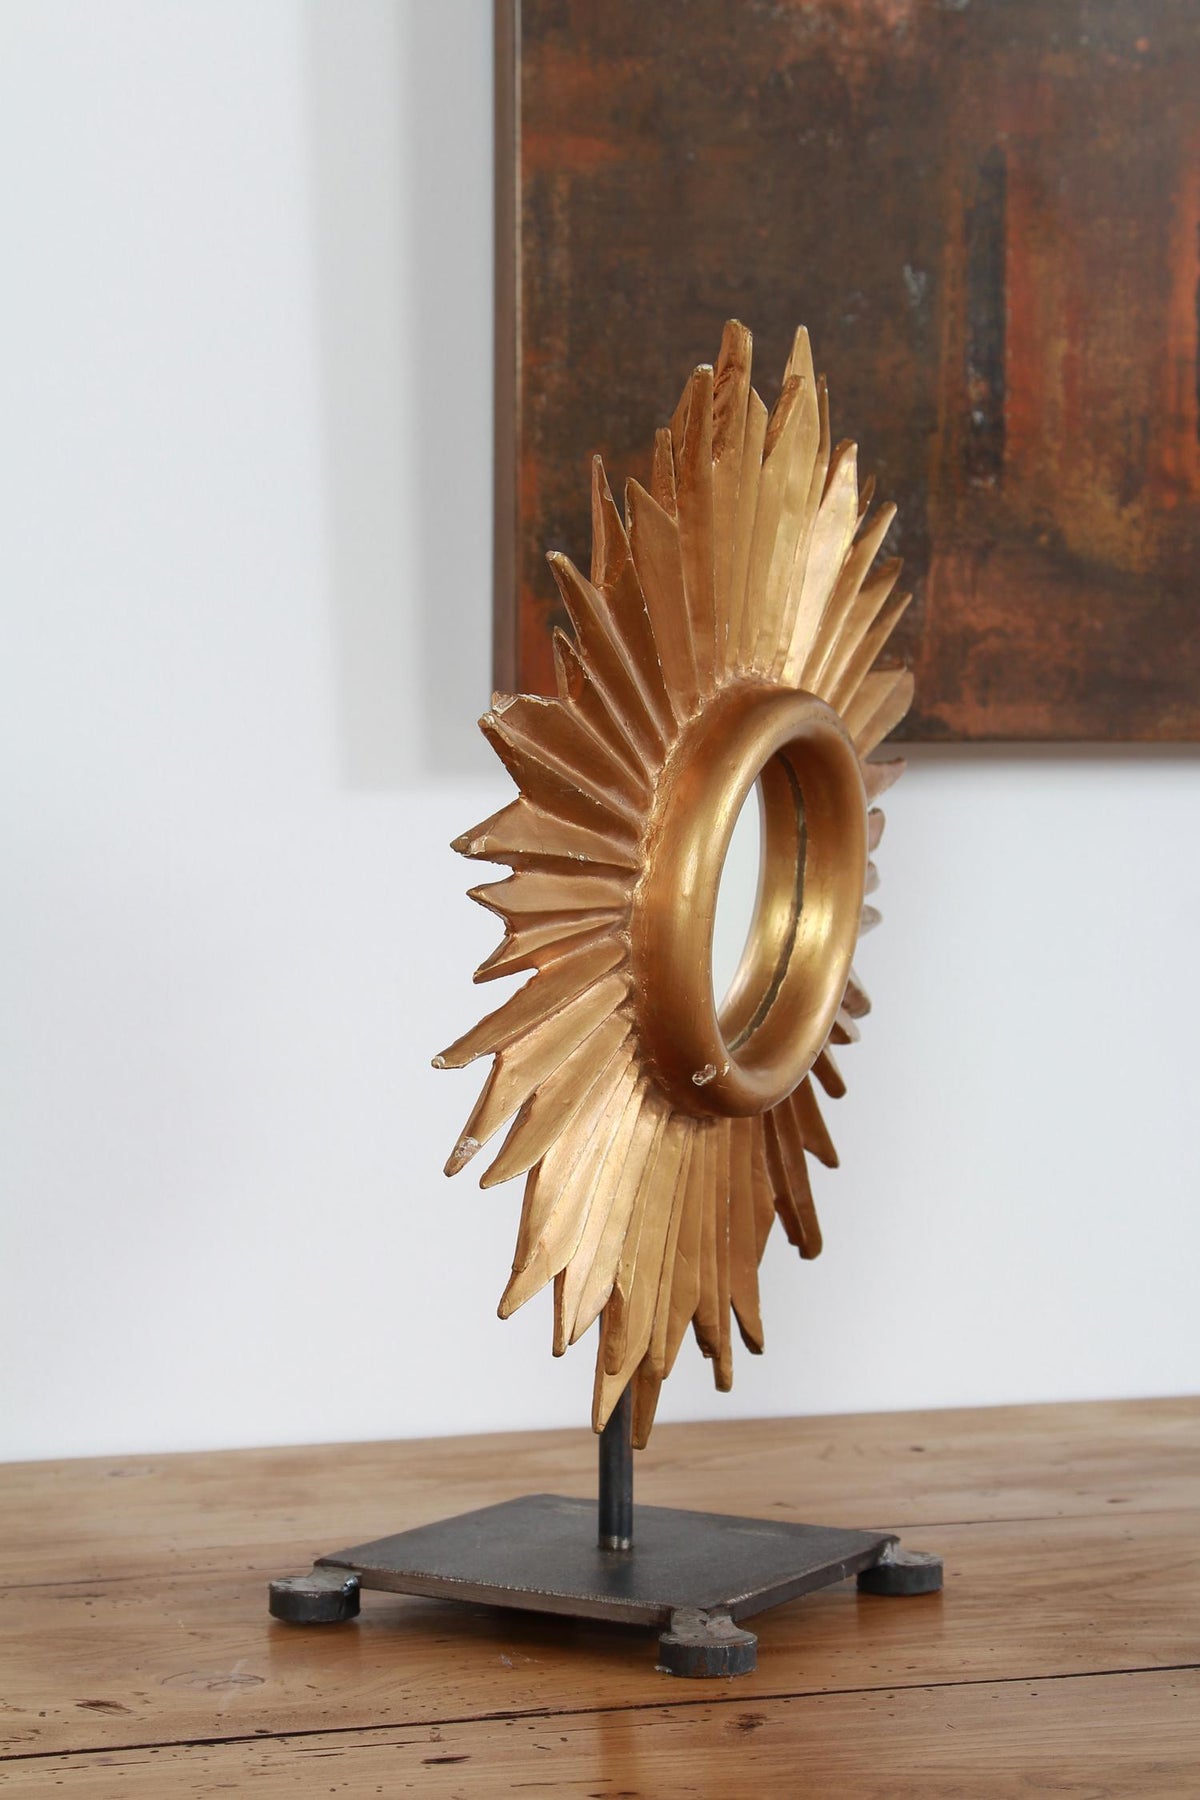 French Sunburst Mirror on Hand Forged Iron Stand